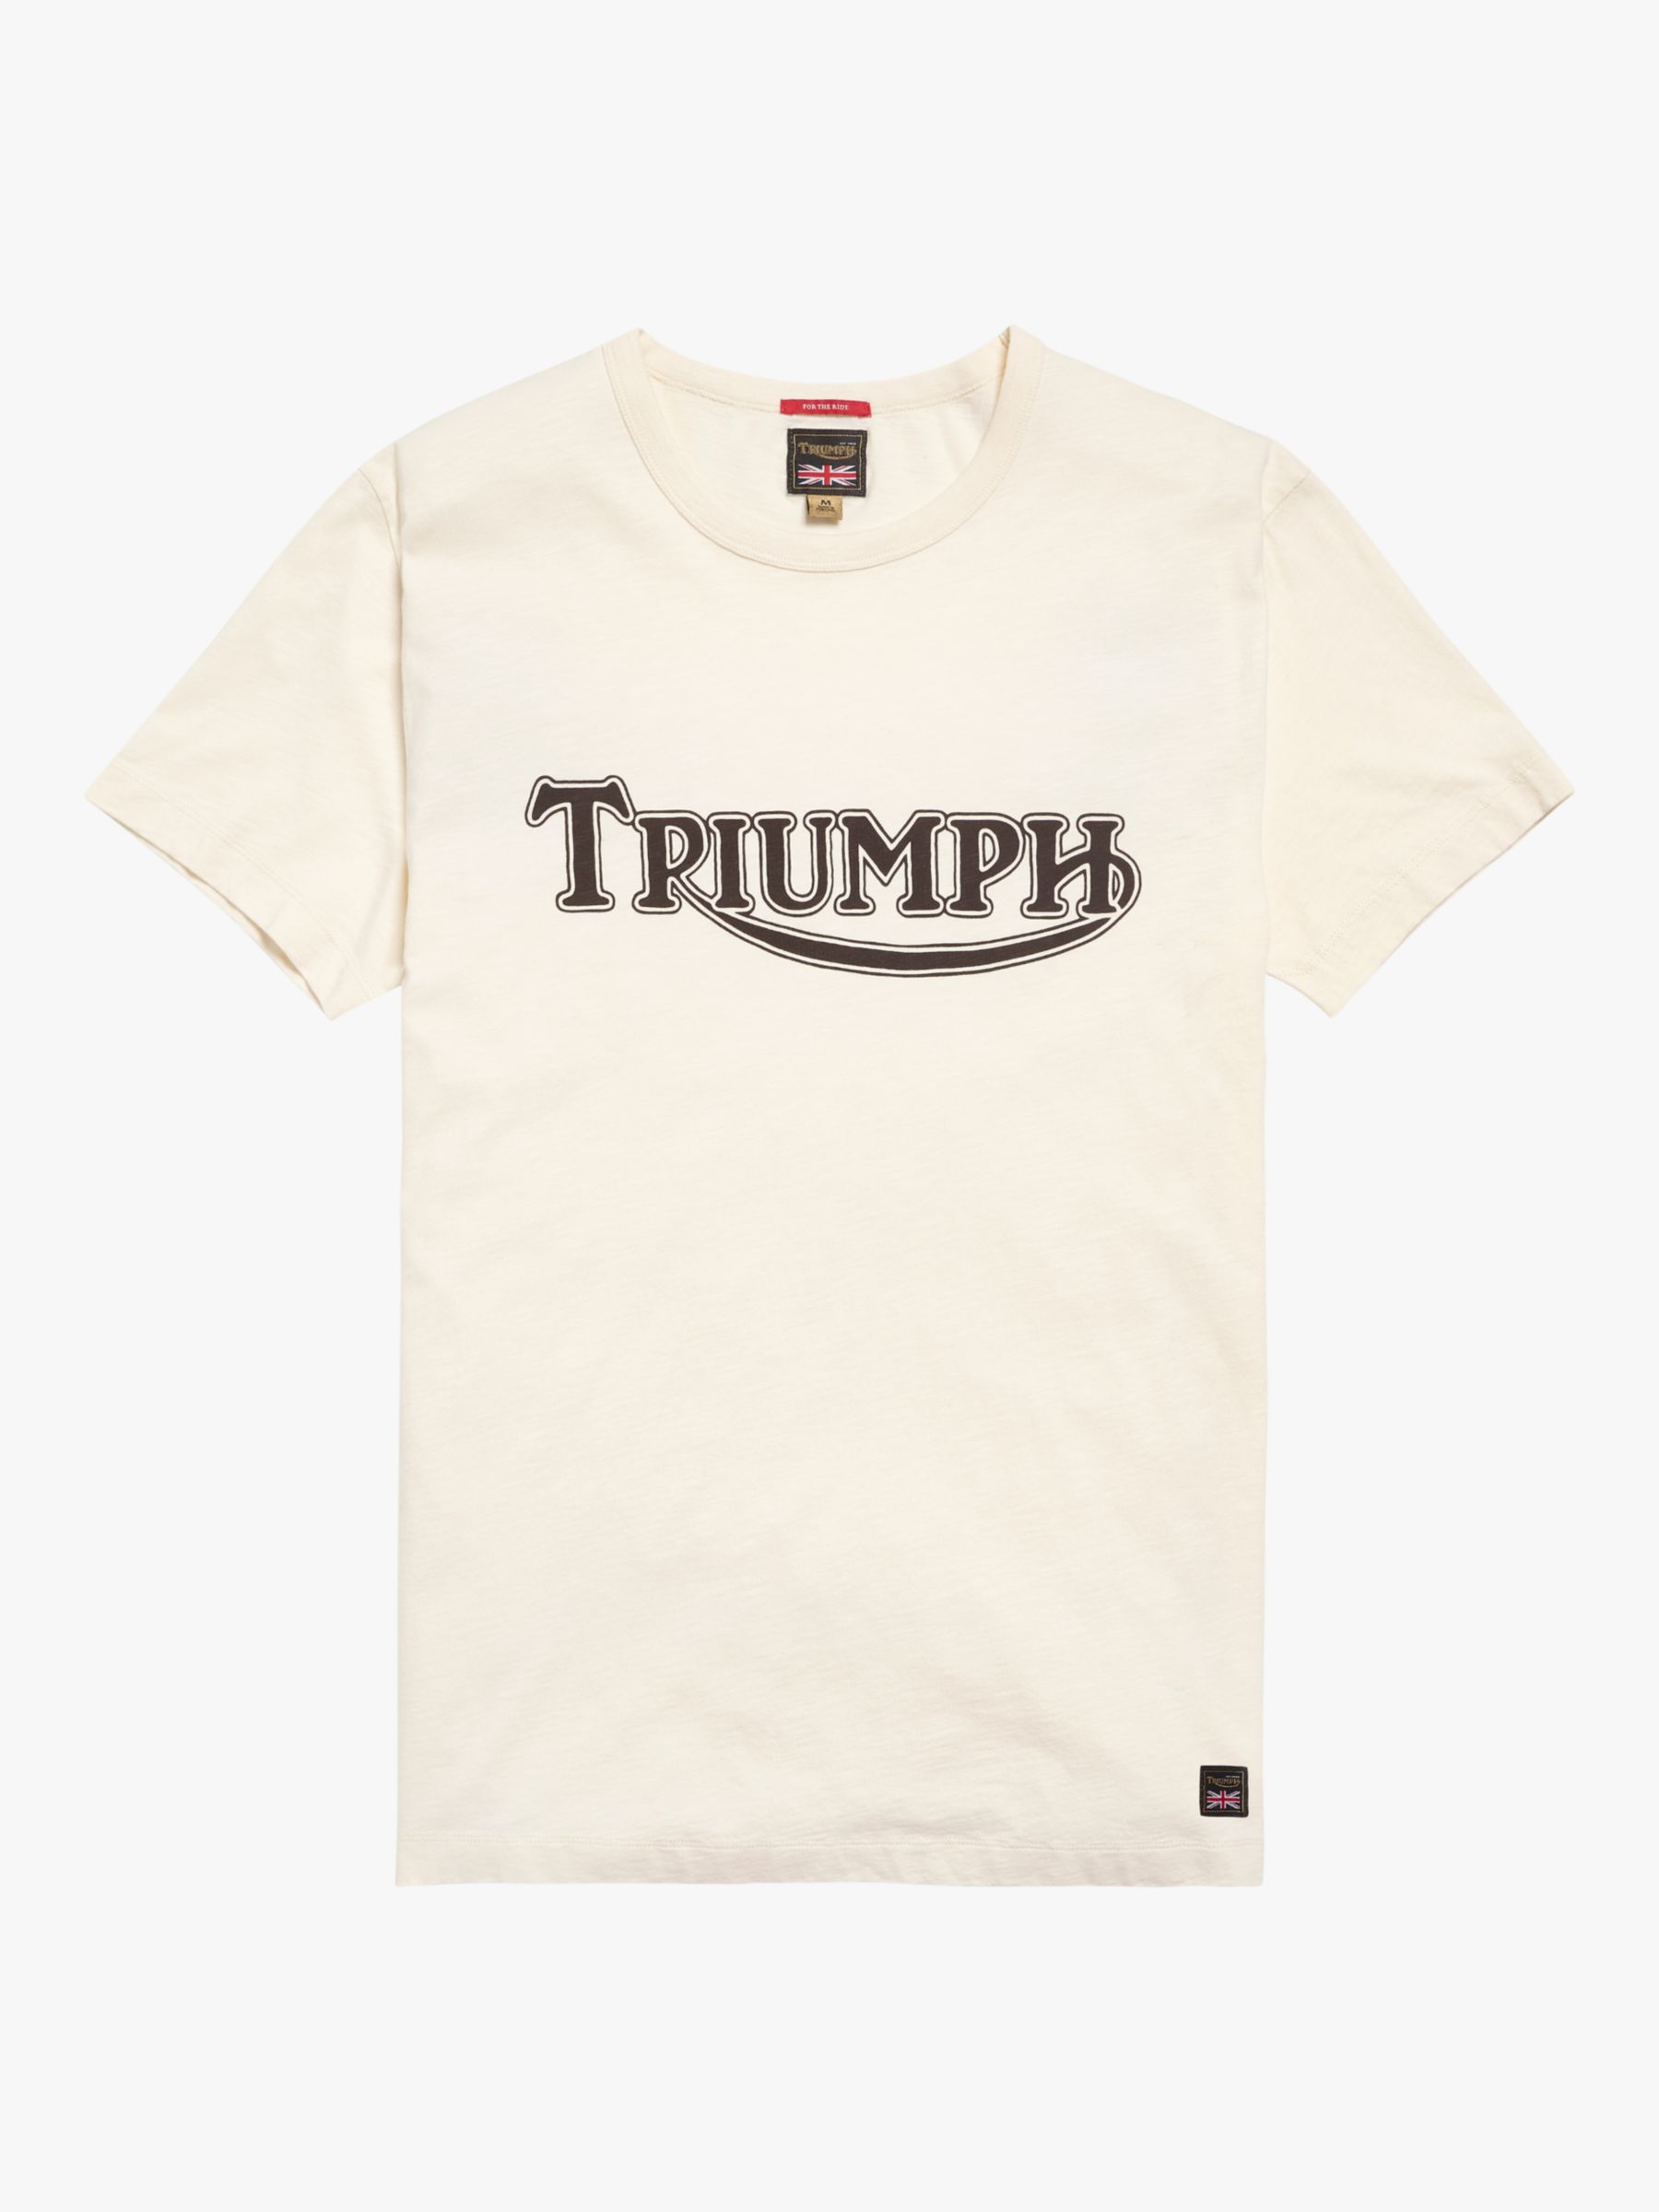 Triumph Motorcycles Fork Seal T-Shirt, Bone, S